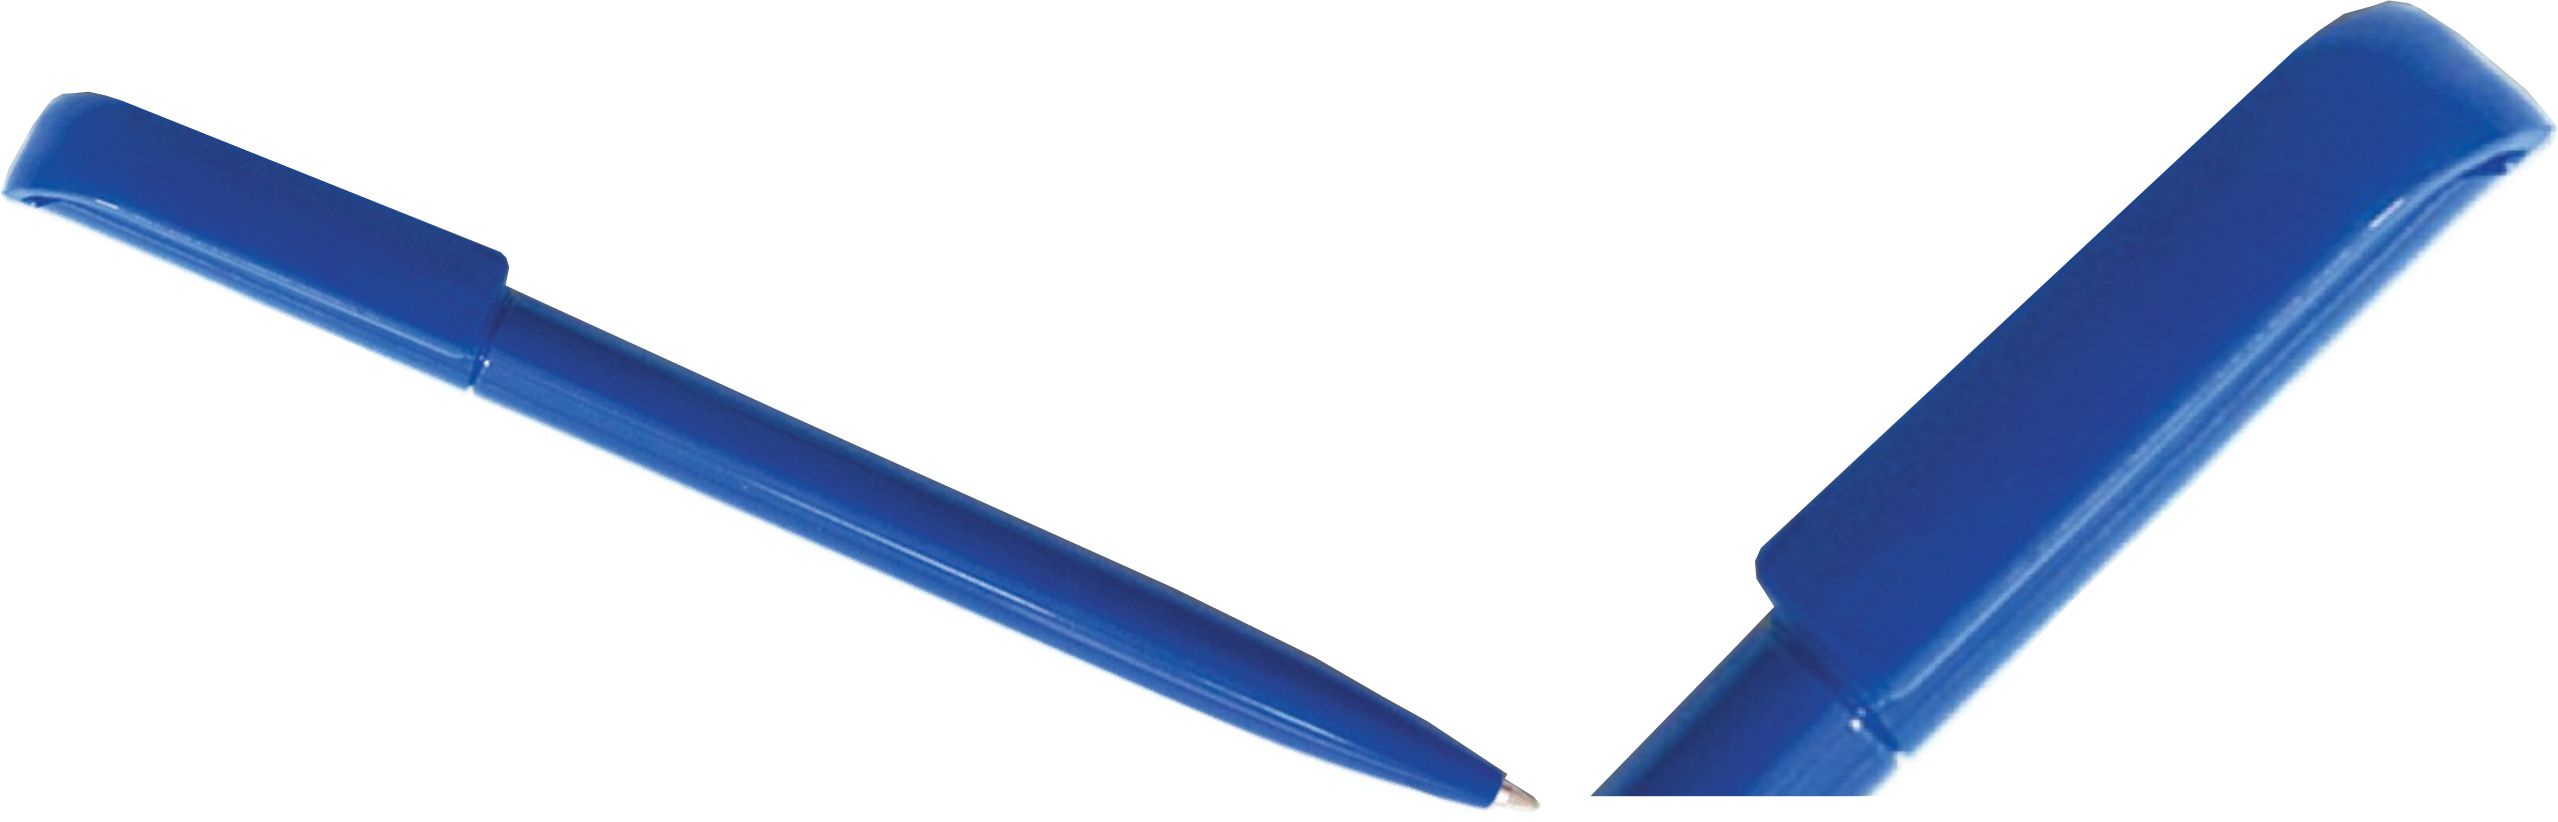 В ящике стола лежат 3 синие ручки